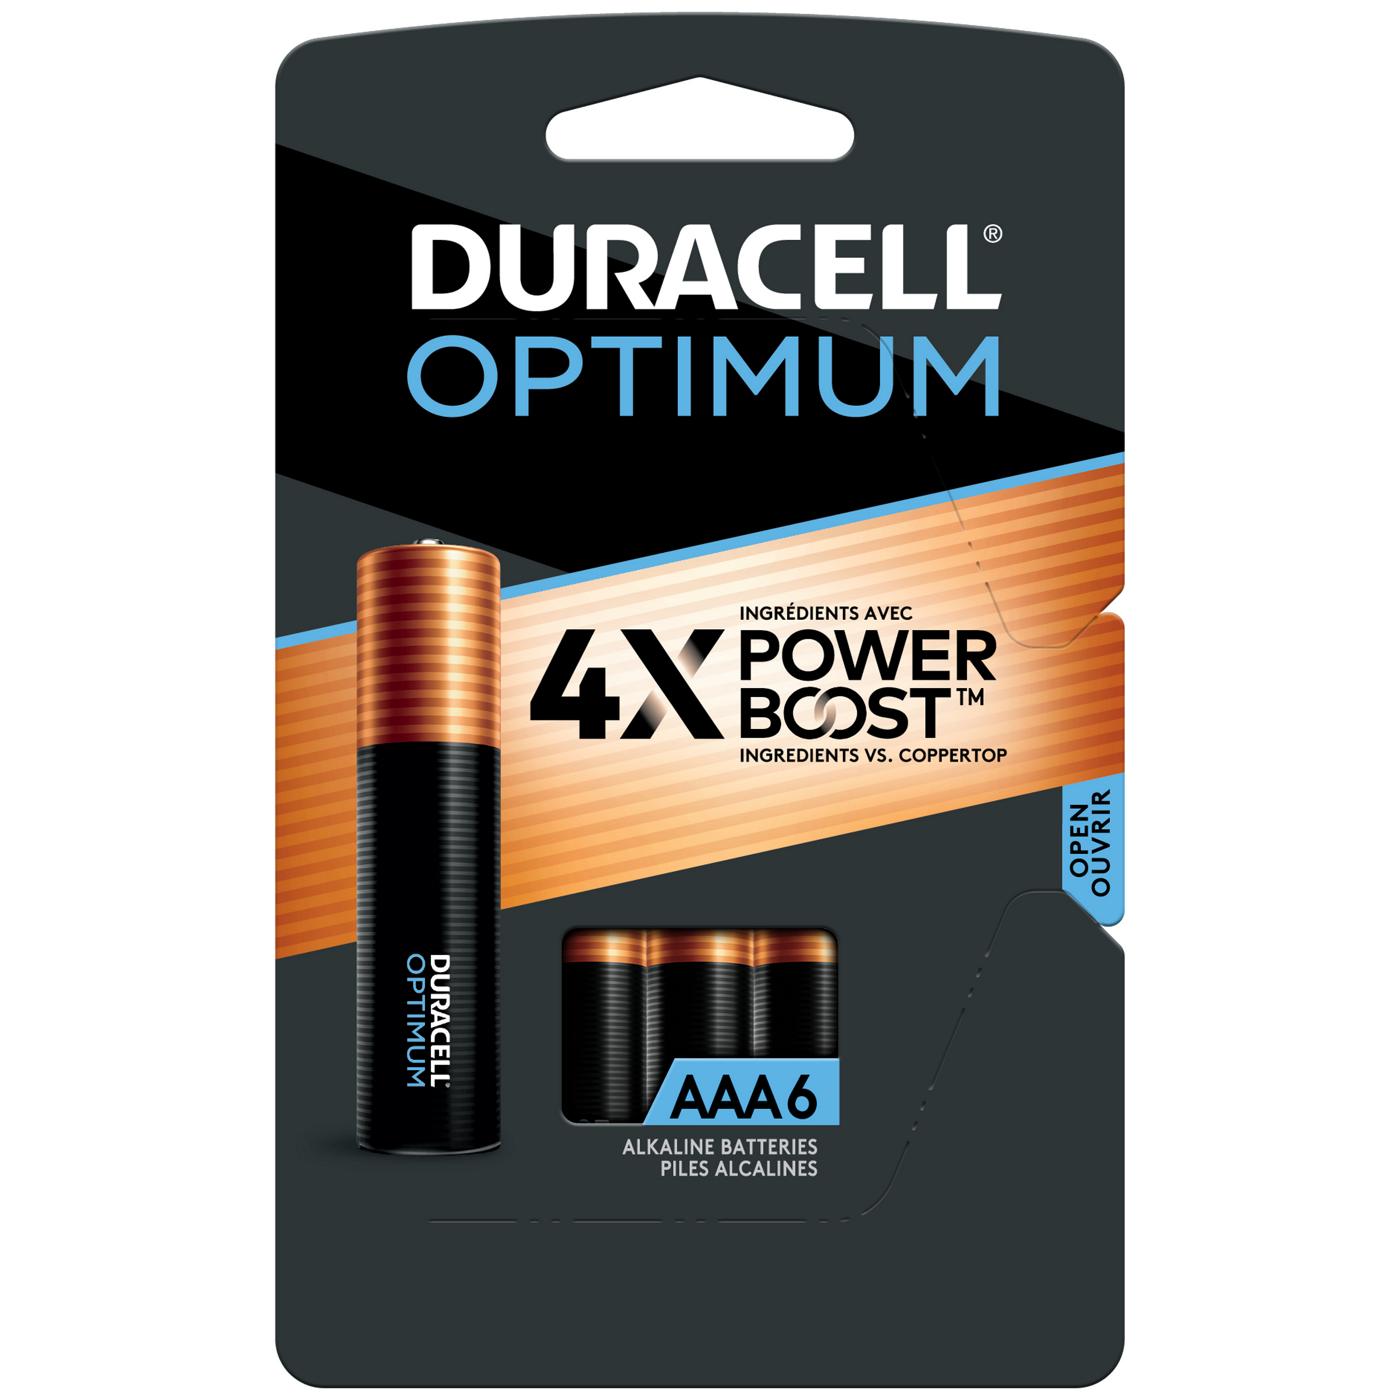 Duracell Optimum Alkaline Batteries, 1.5V AAA; image 1 of 2